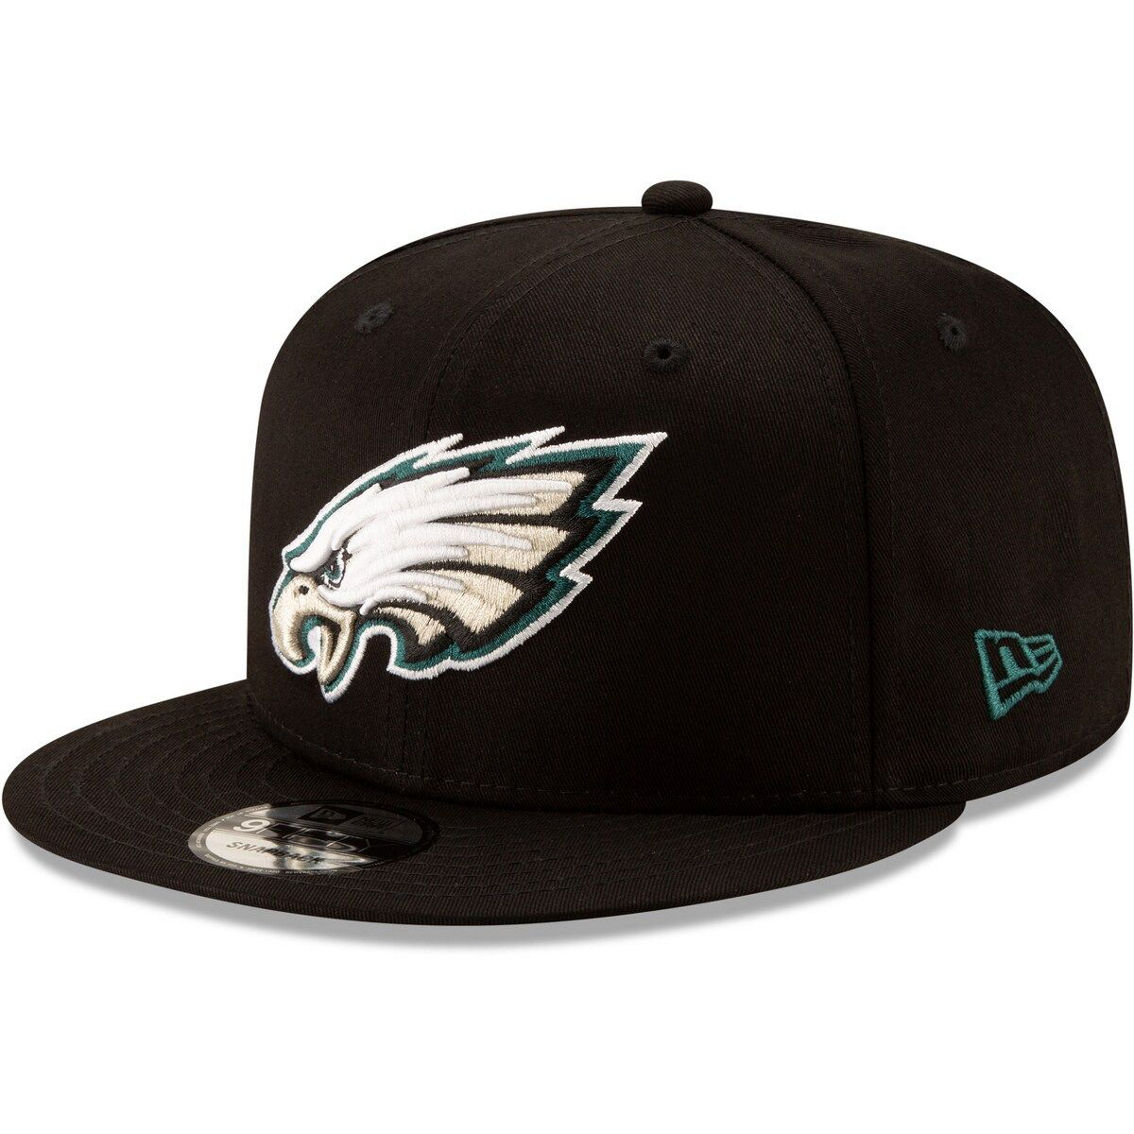 New Era Men's Black Philadelphia Eagles Basic 9FIFTY Adjustable Snapback Hat - Image 2 of 2